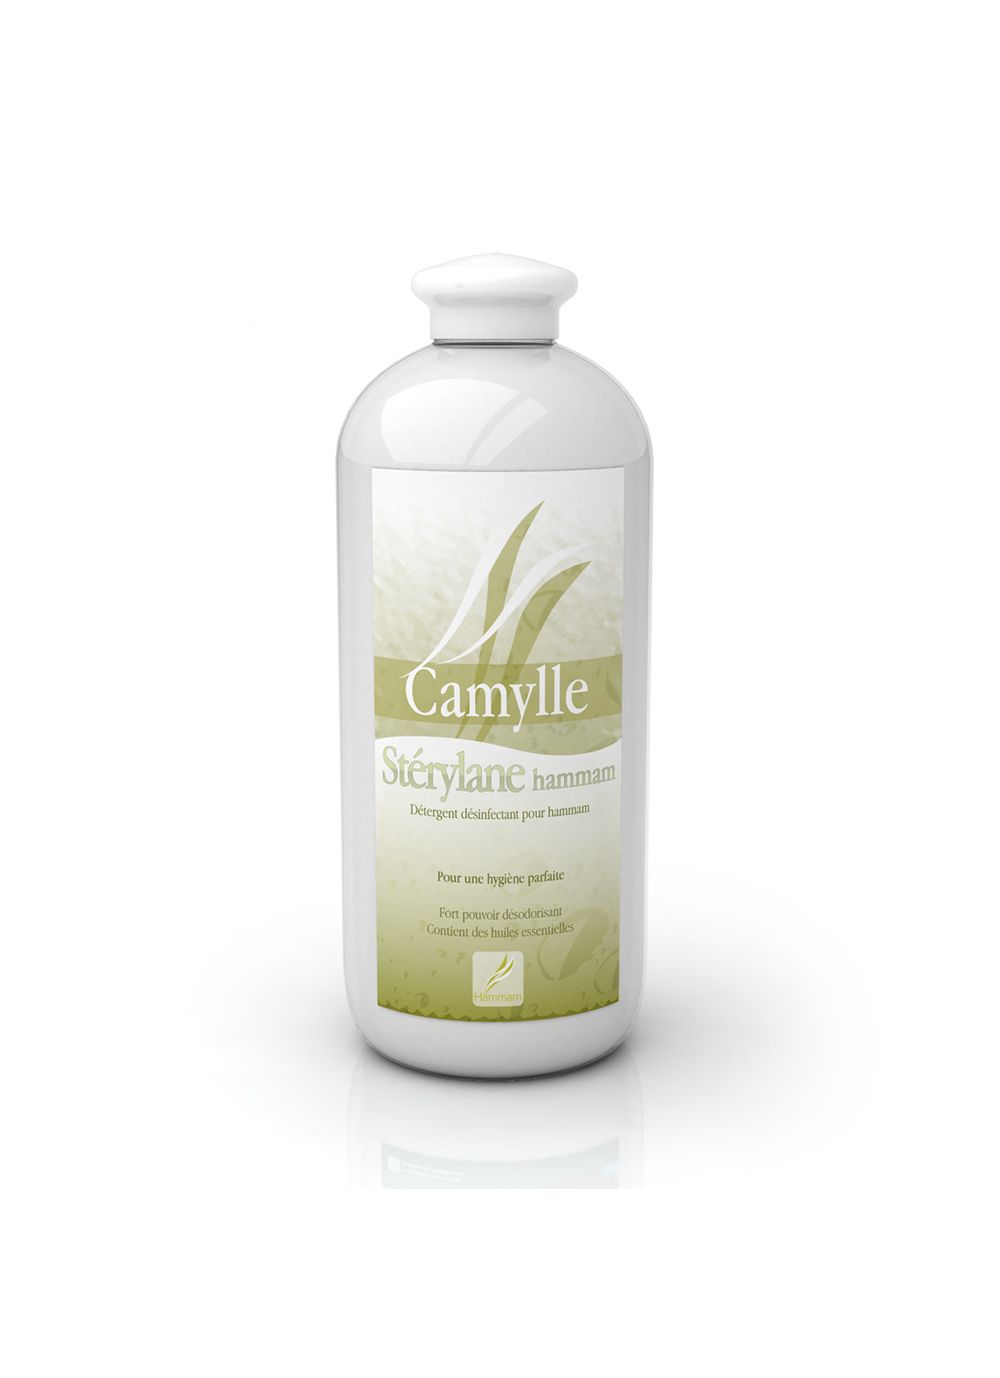 camyyle tablelya sterylane désinfectant nettoyant hammam flacon de 1 litre